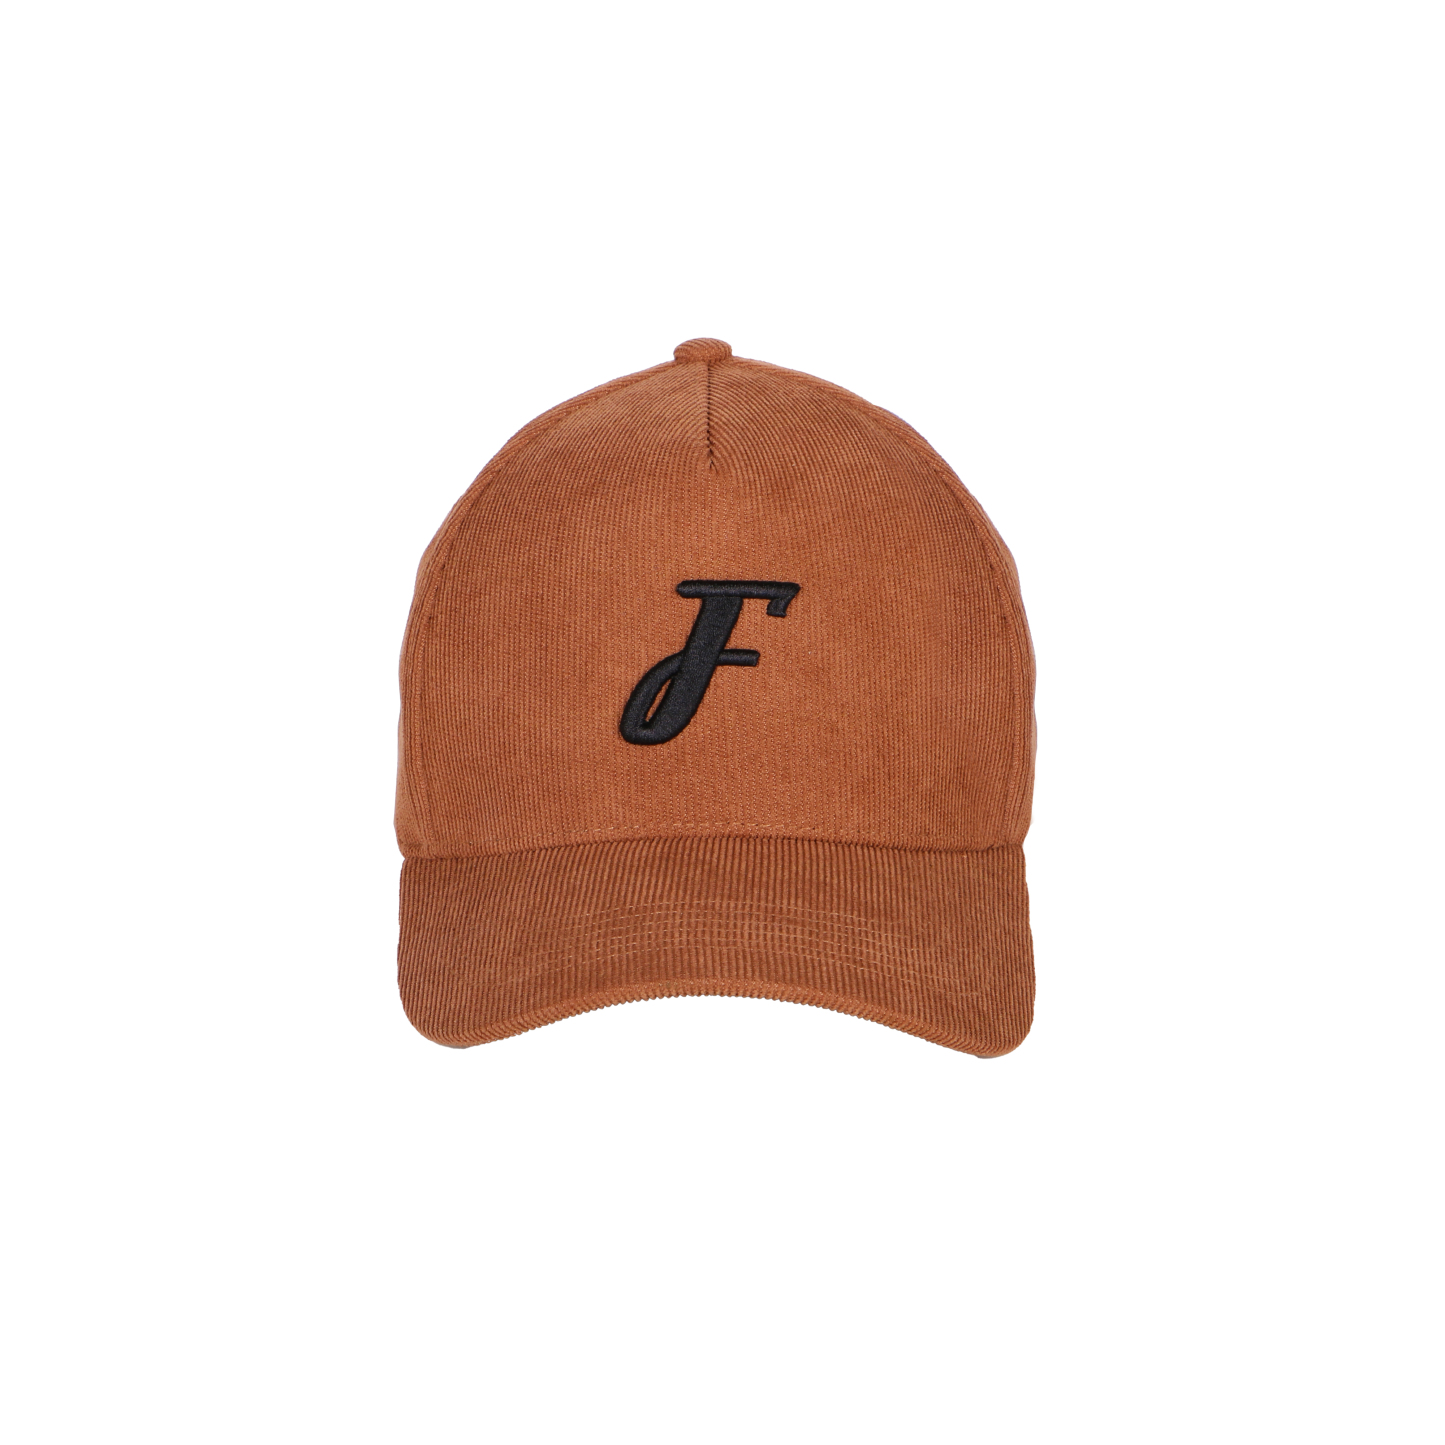 Fipper Headgear Corduroy Adjustable Cap F in Brown